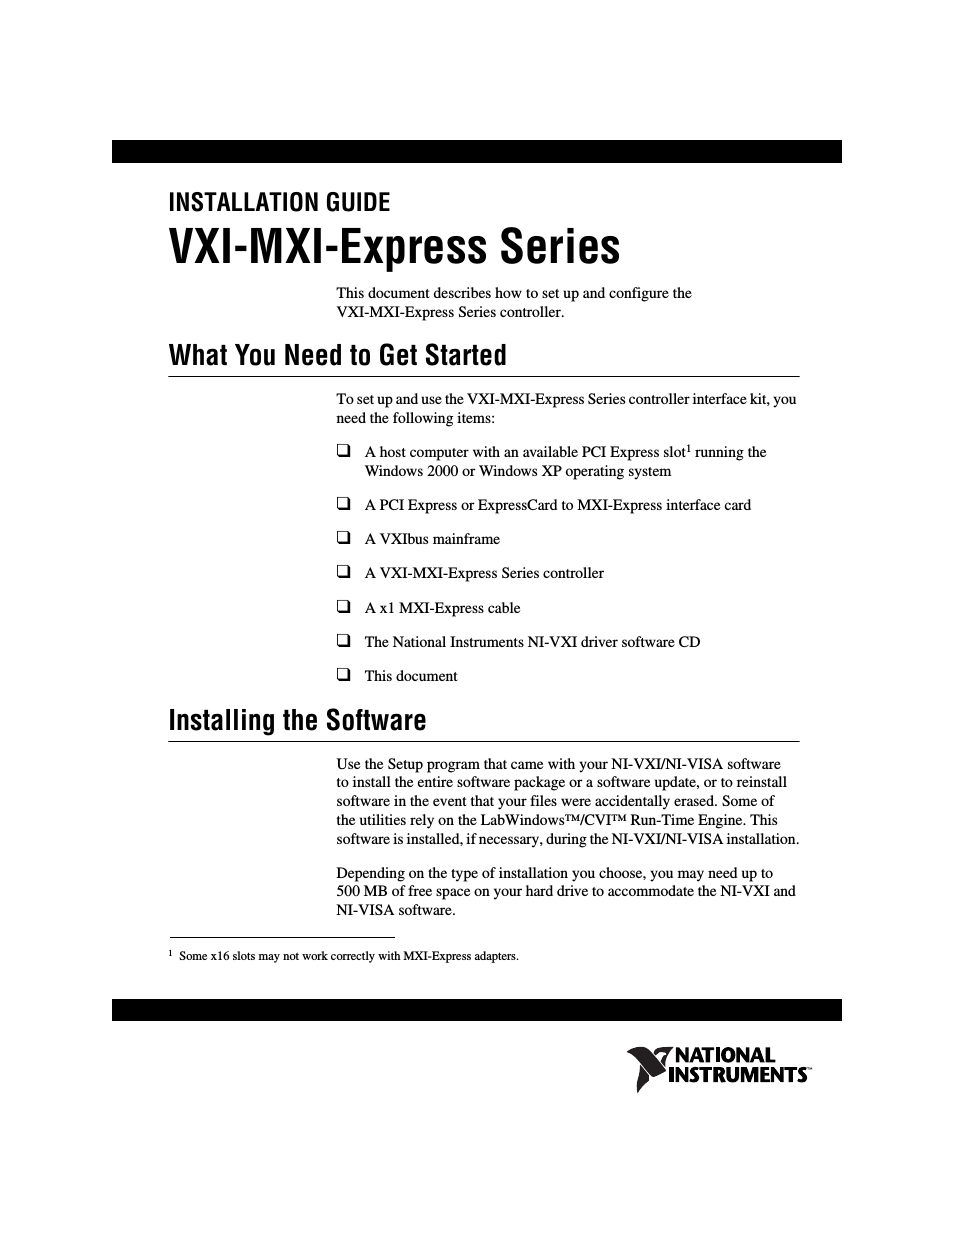 VXI-MXI-Express Series